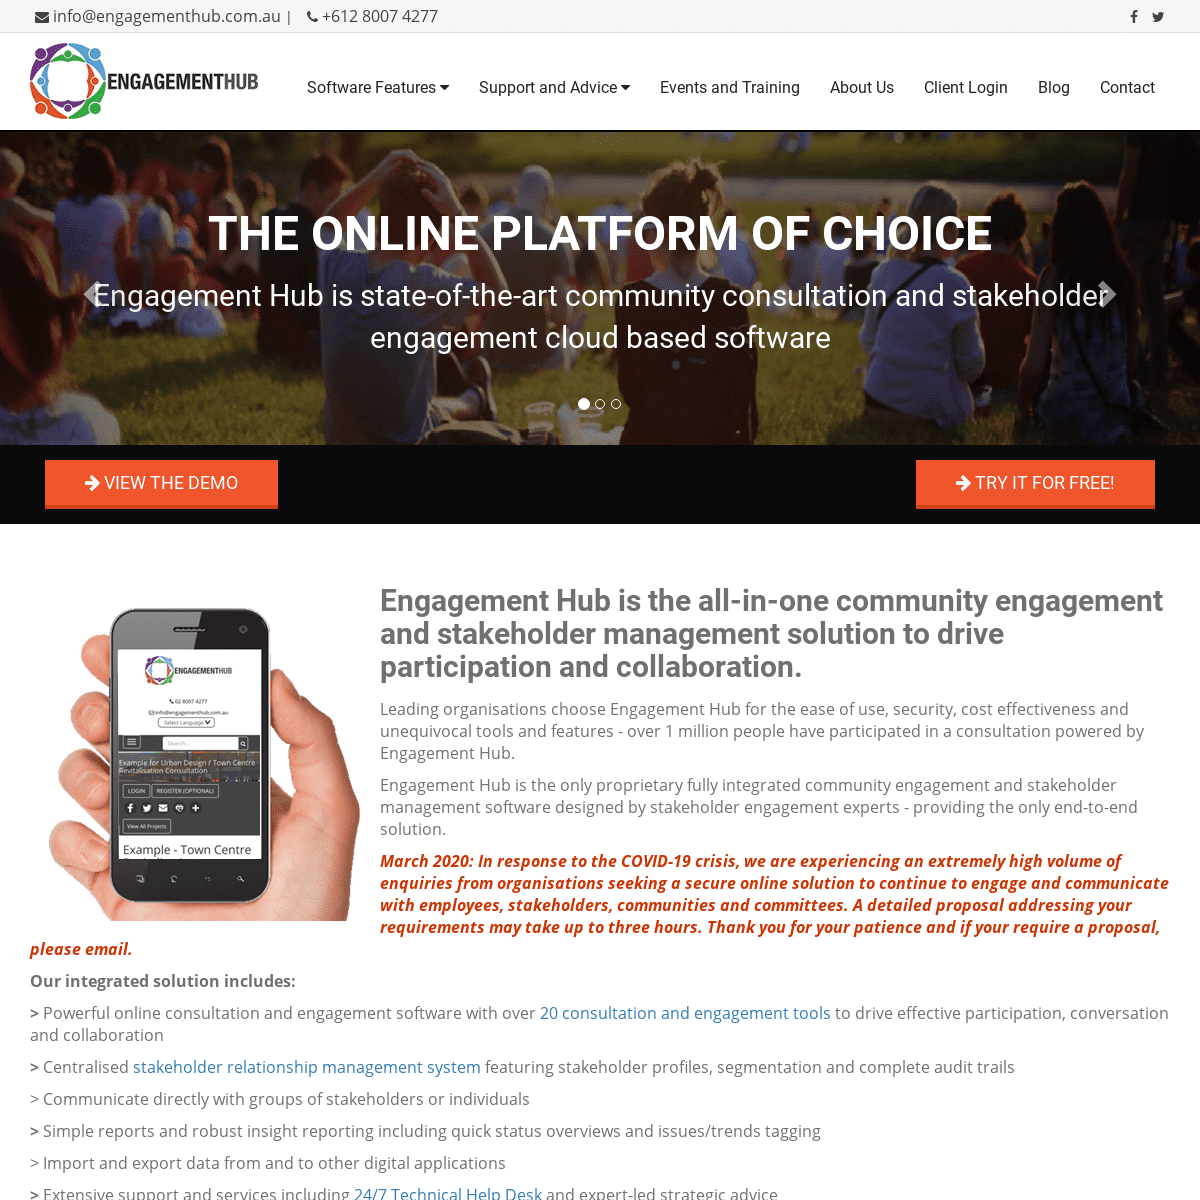 A complete backup of engagementhub.com.au